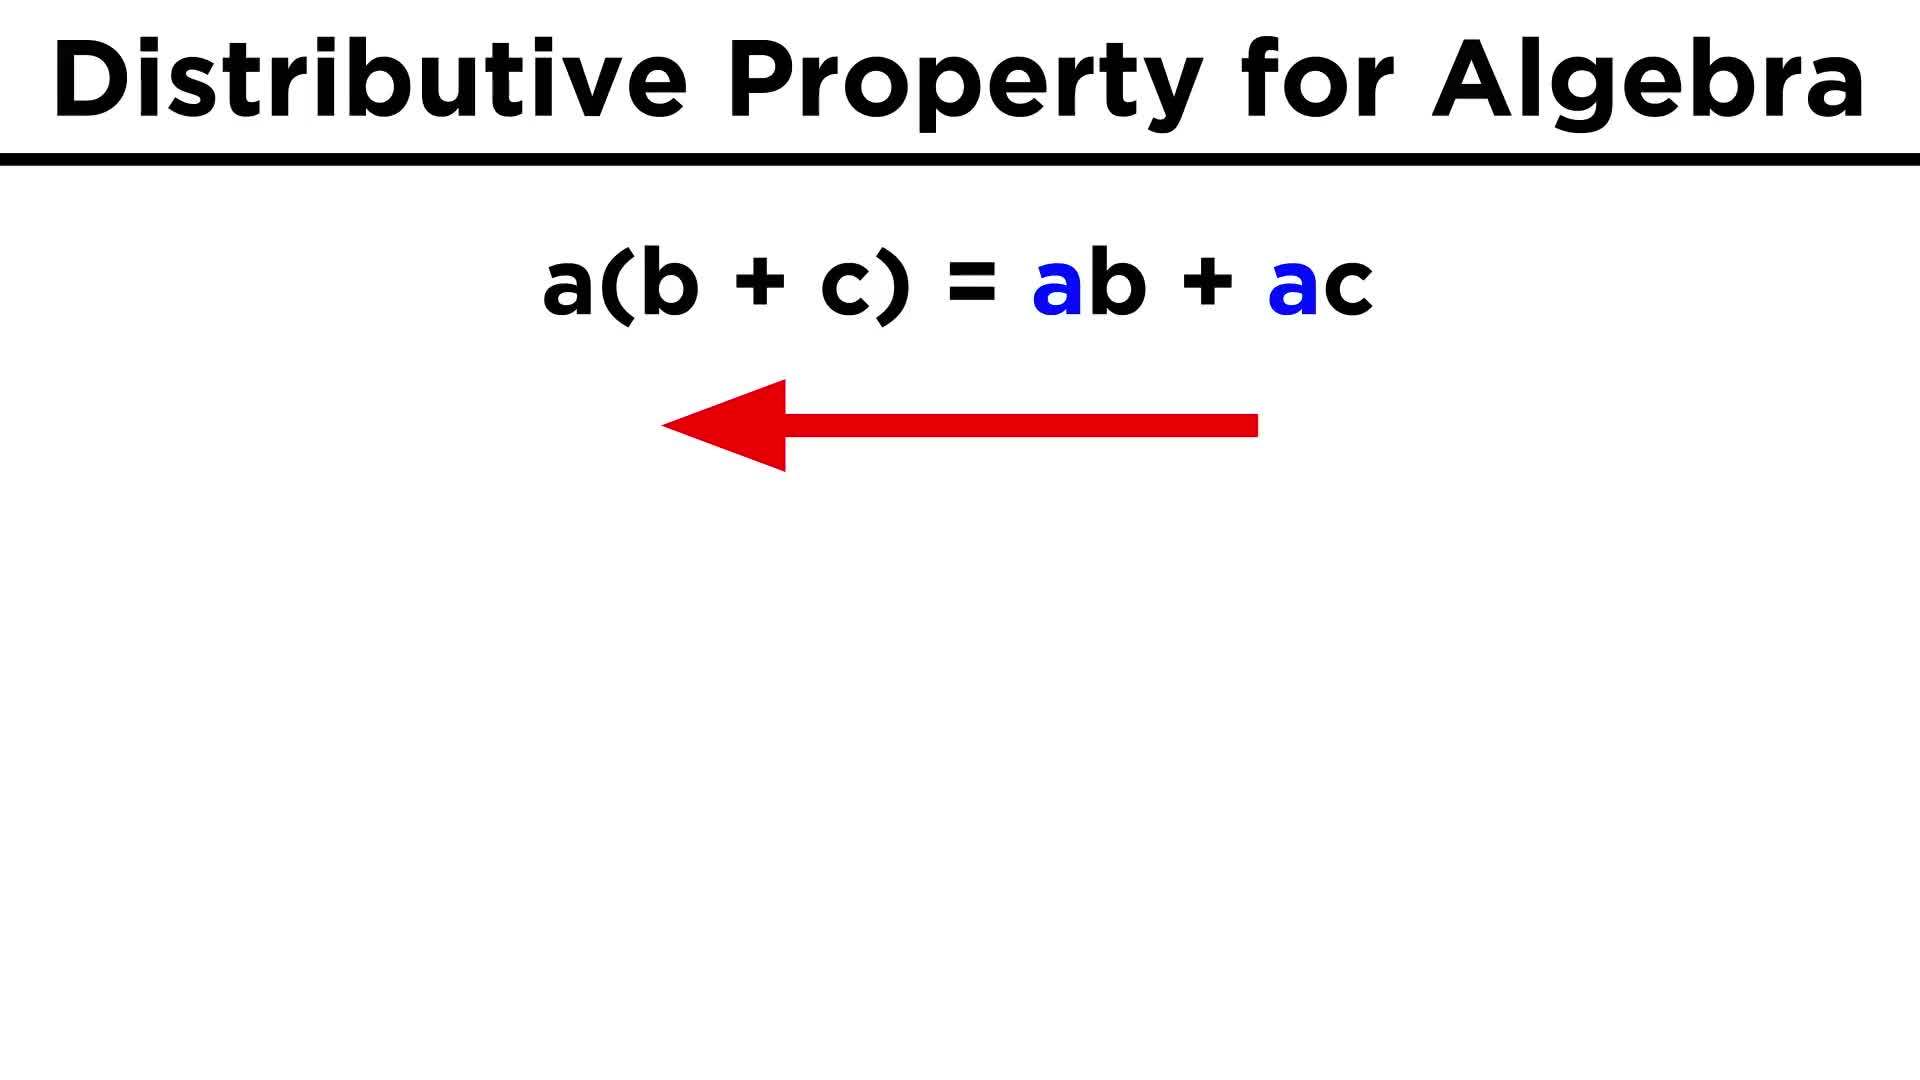 Basic Number Properties